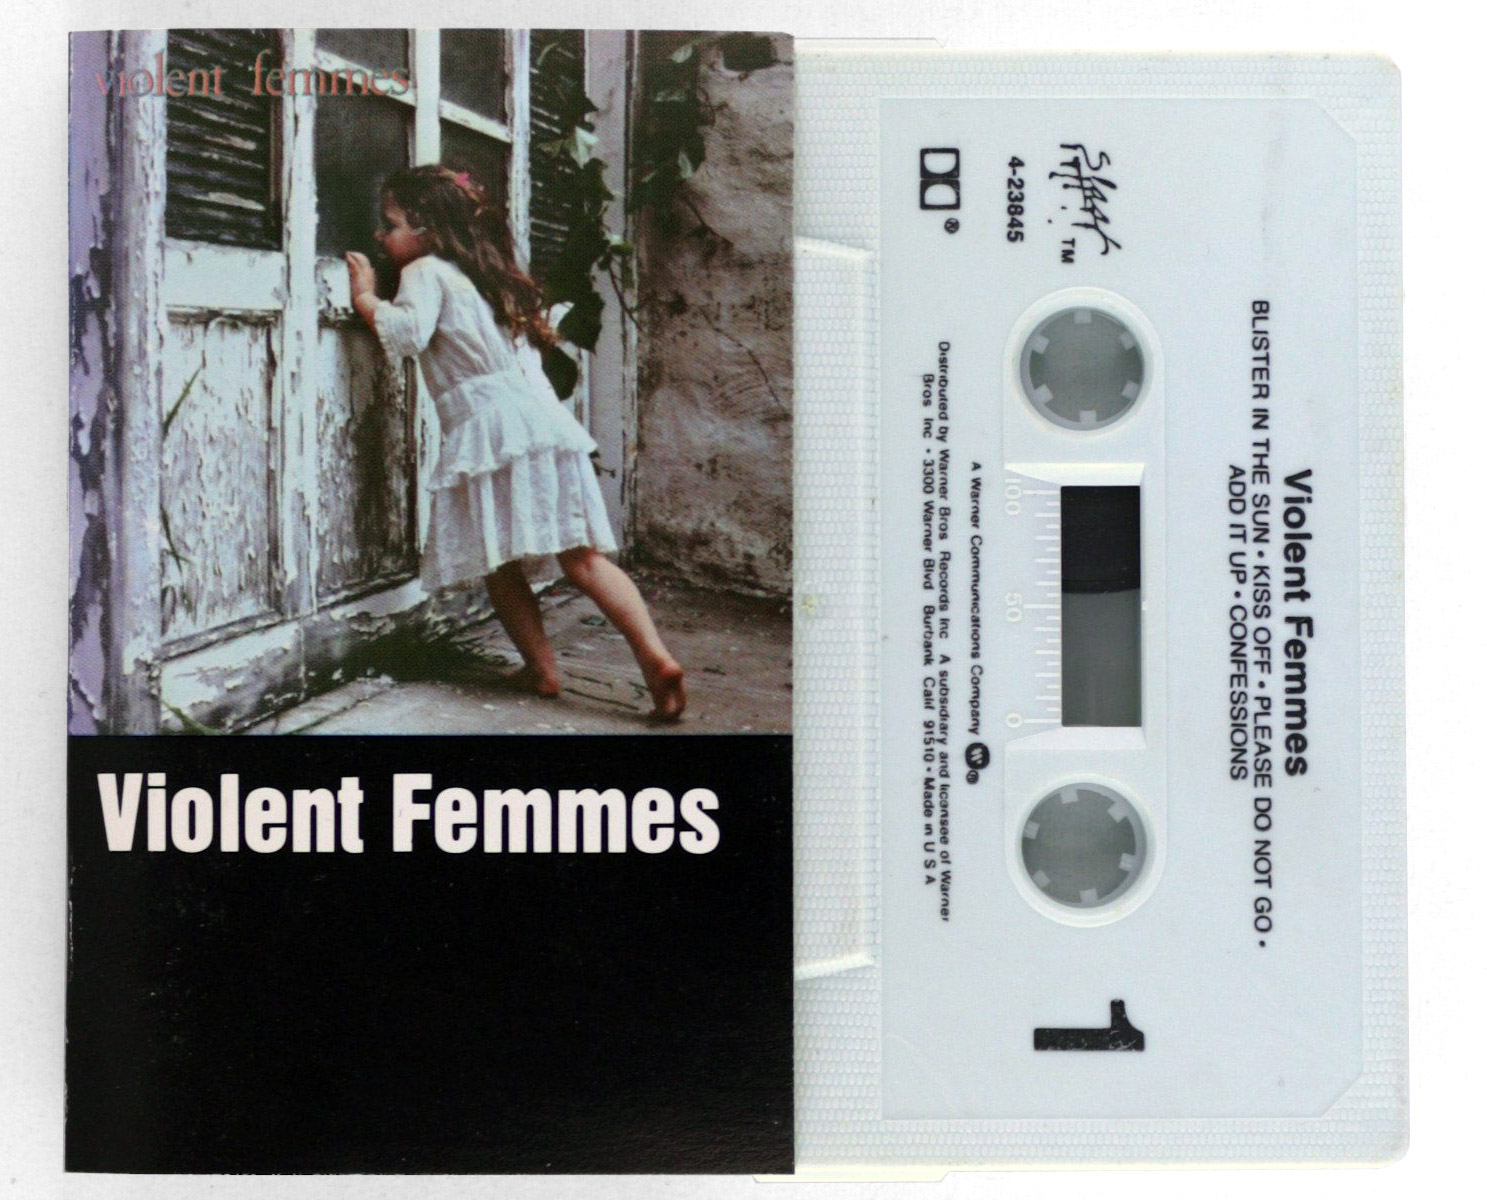 A tape cassette of the Violent Femmes first album